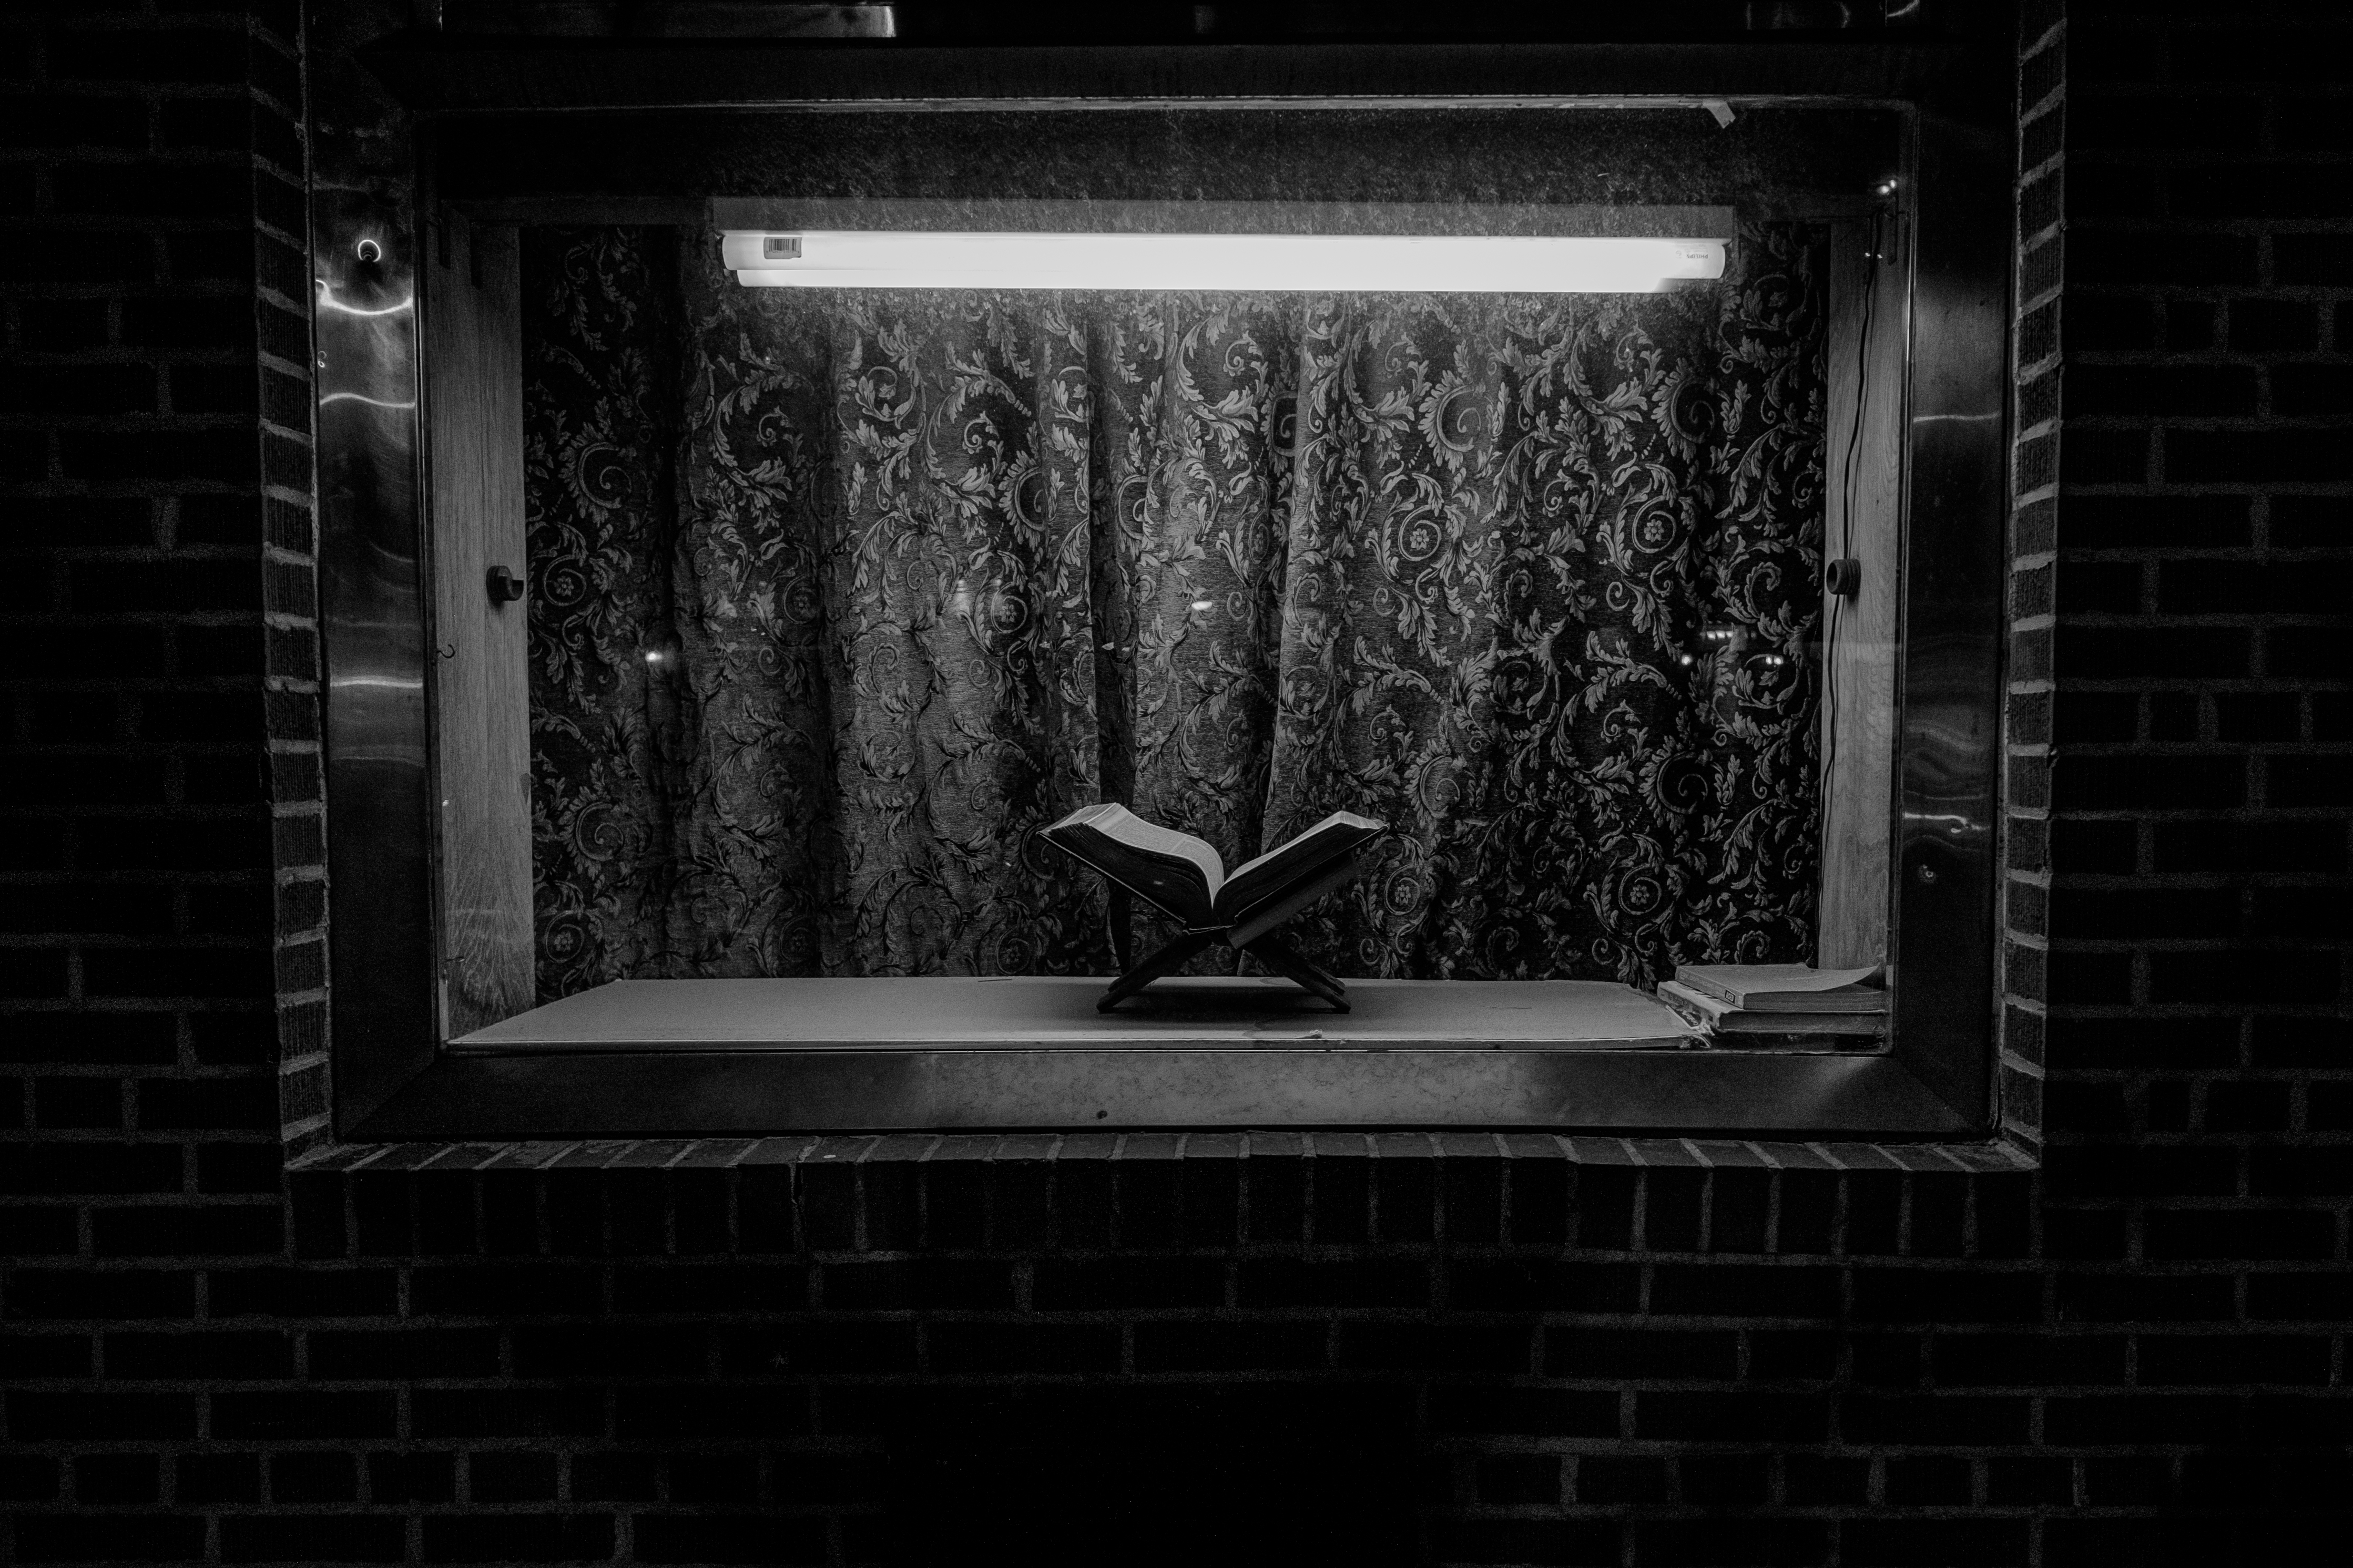 bible-display-window-night-brooklyn-black-and-white-photography